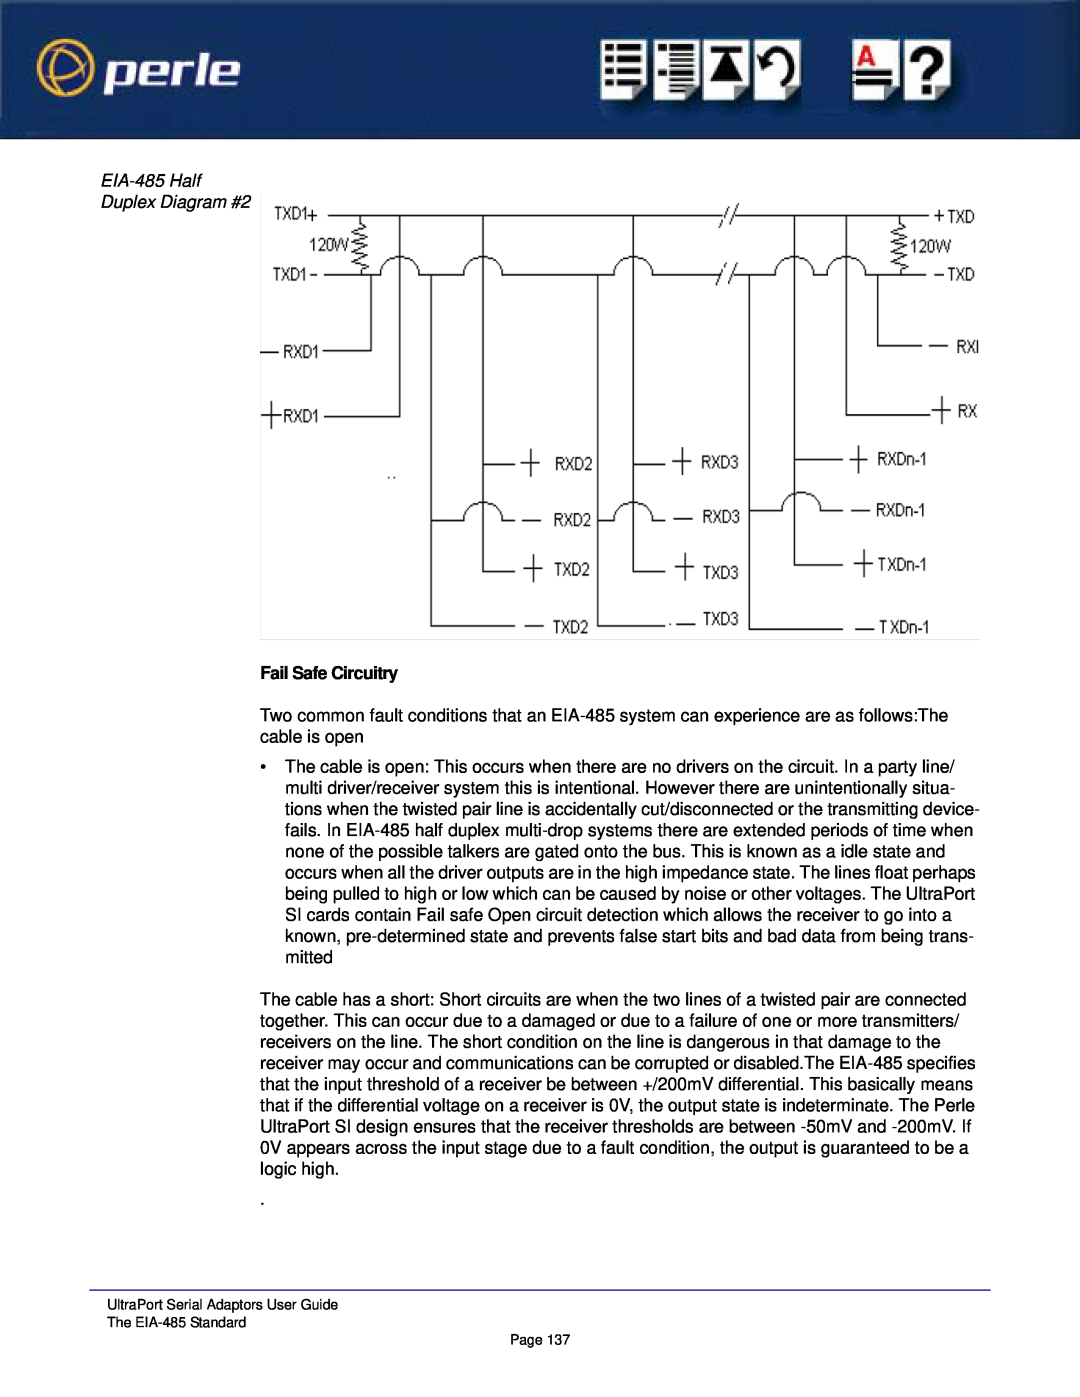 Perle Systems 5500152-23 manual EIA-485 Half Duplex Diagram #2, Fail Safe Circuitry 